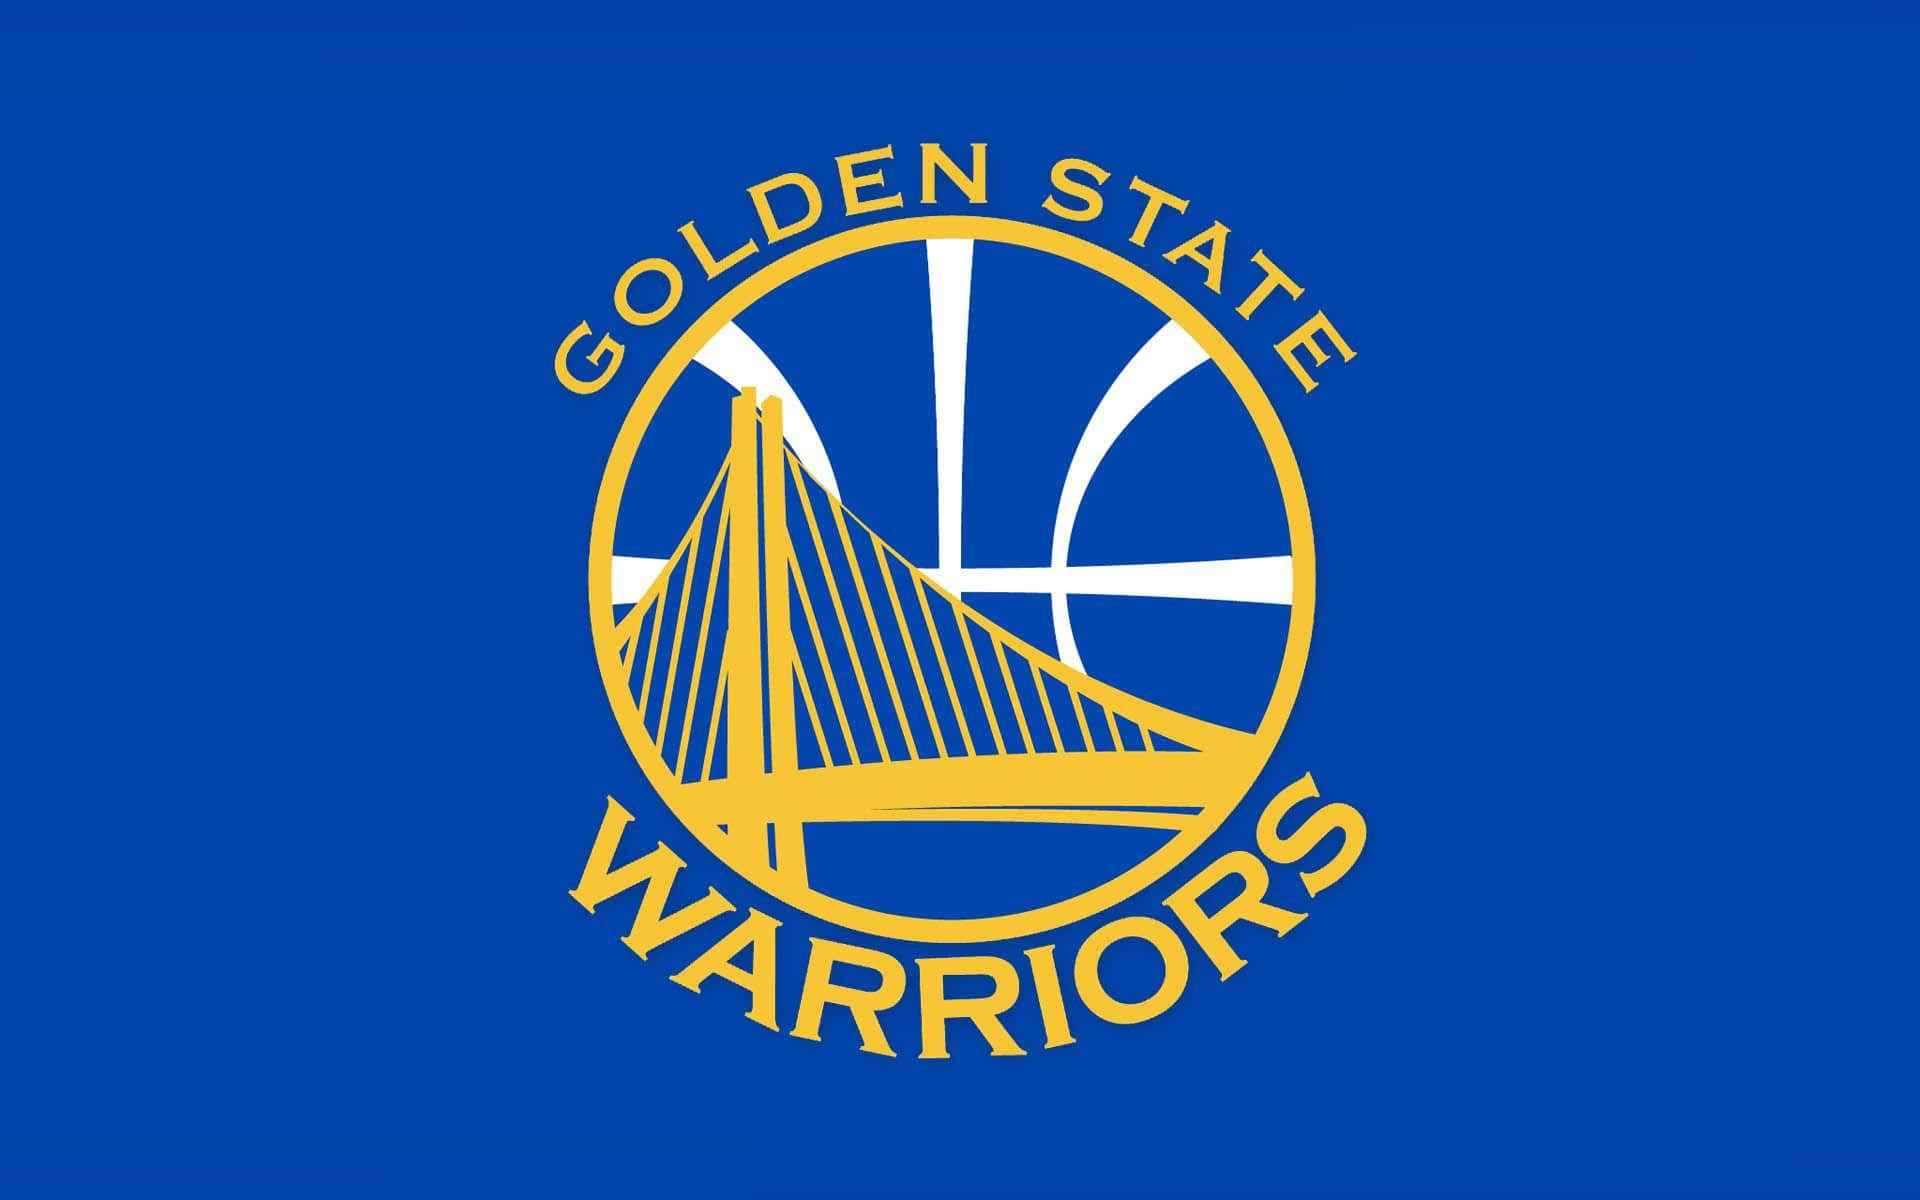 Offentlige GSW Golden State Warriors logo med det ikoniske blå og gule GSW brevskrivning Wallpaper